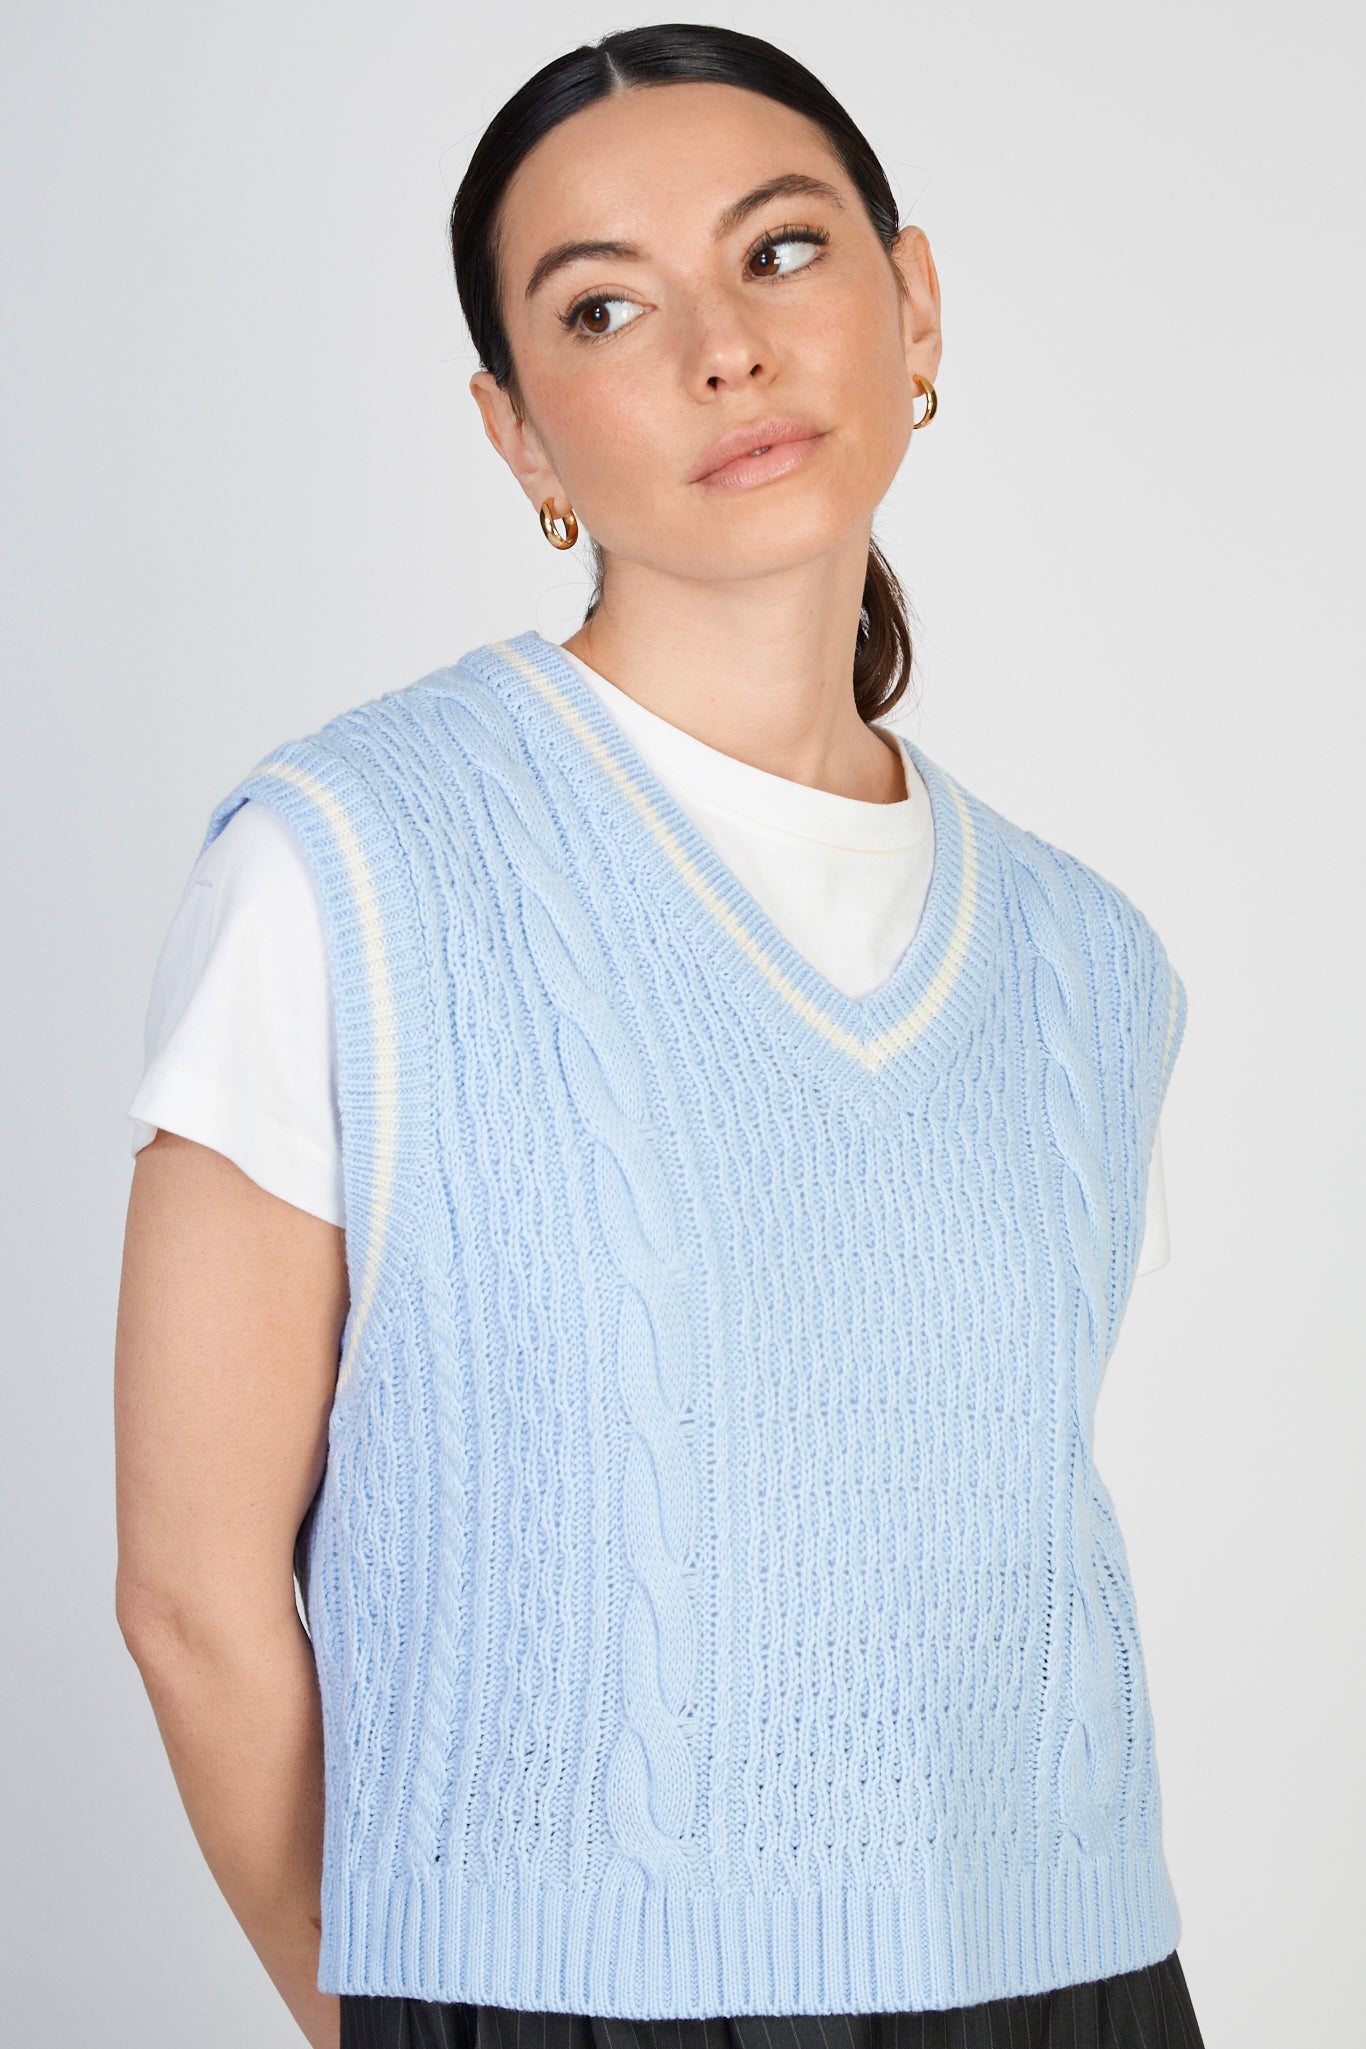 Light blue and ivory varsity trim sweater vest